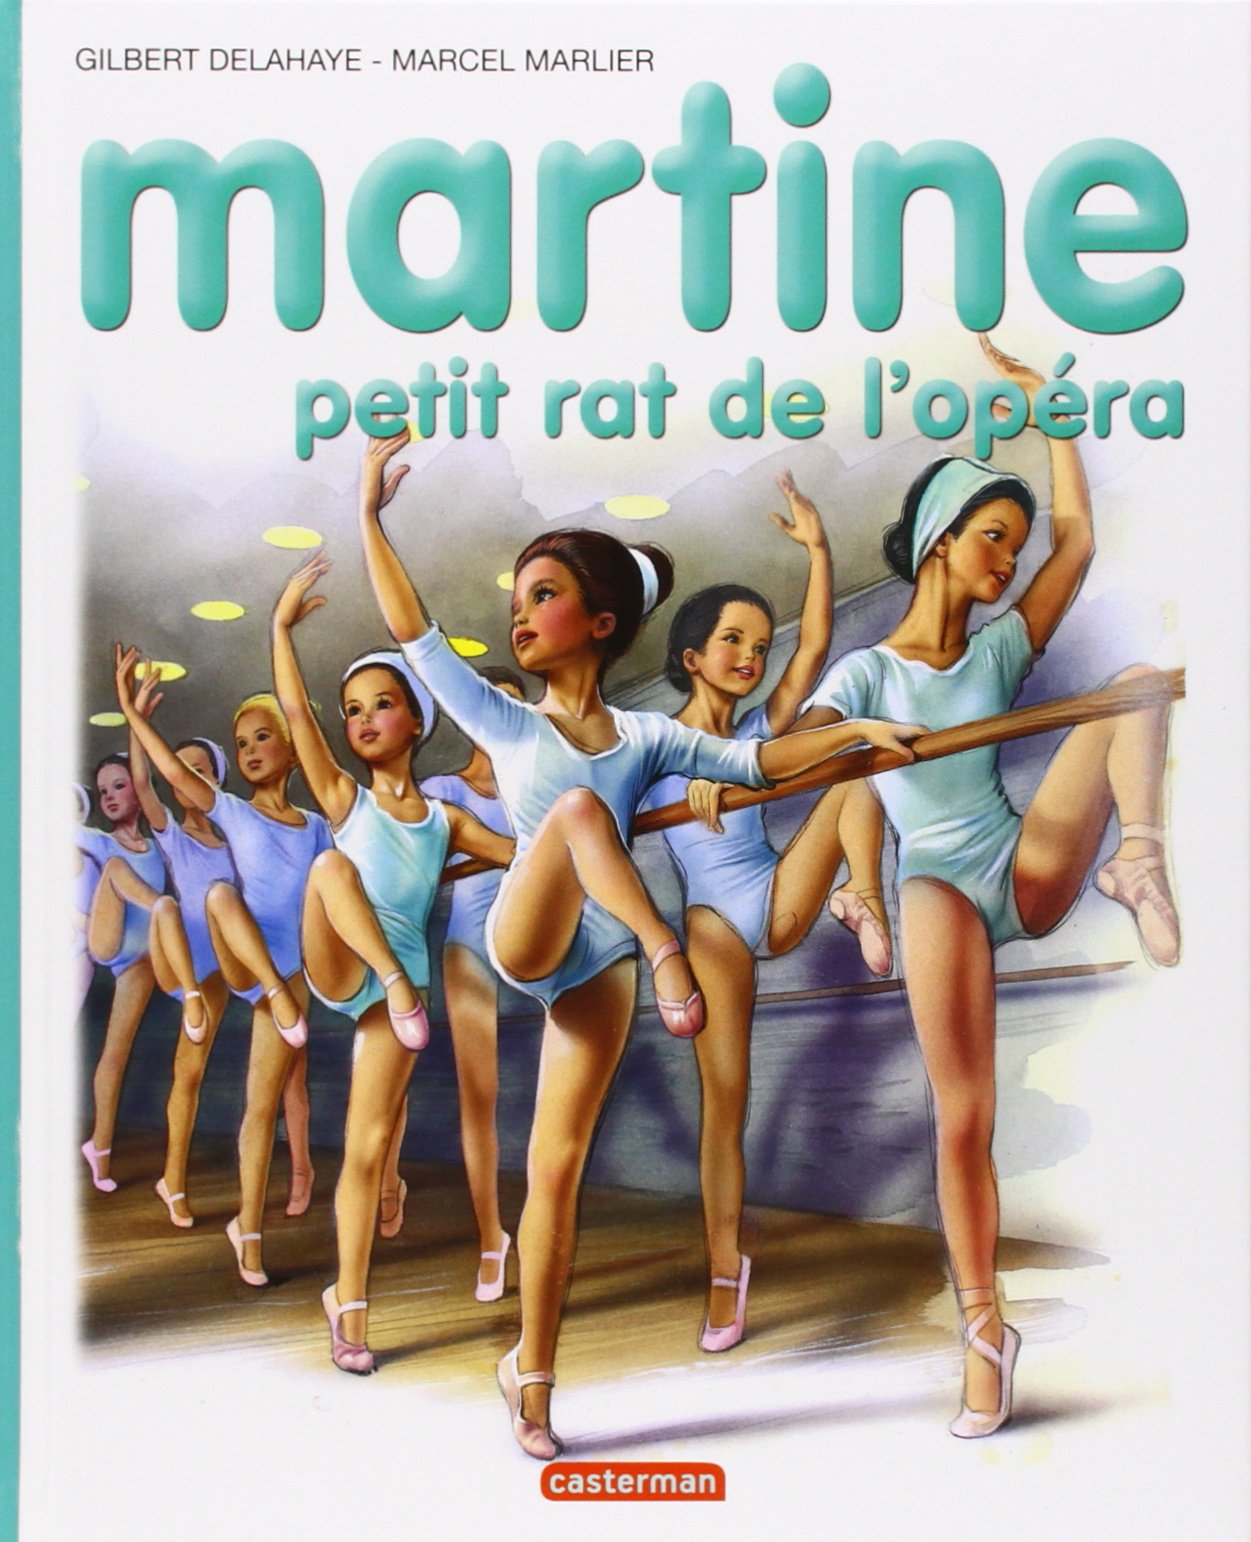 Livre ISBN 2203101229 Martine (Collection Farandole) : Martine petit rat de l'opéra (Gilbert Delahaye)